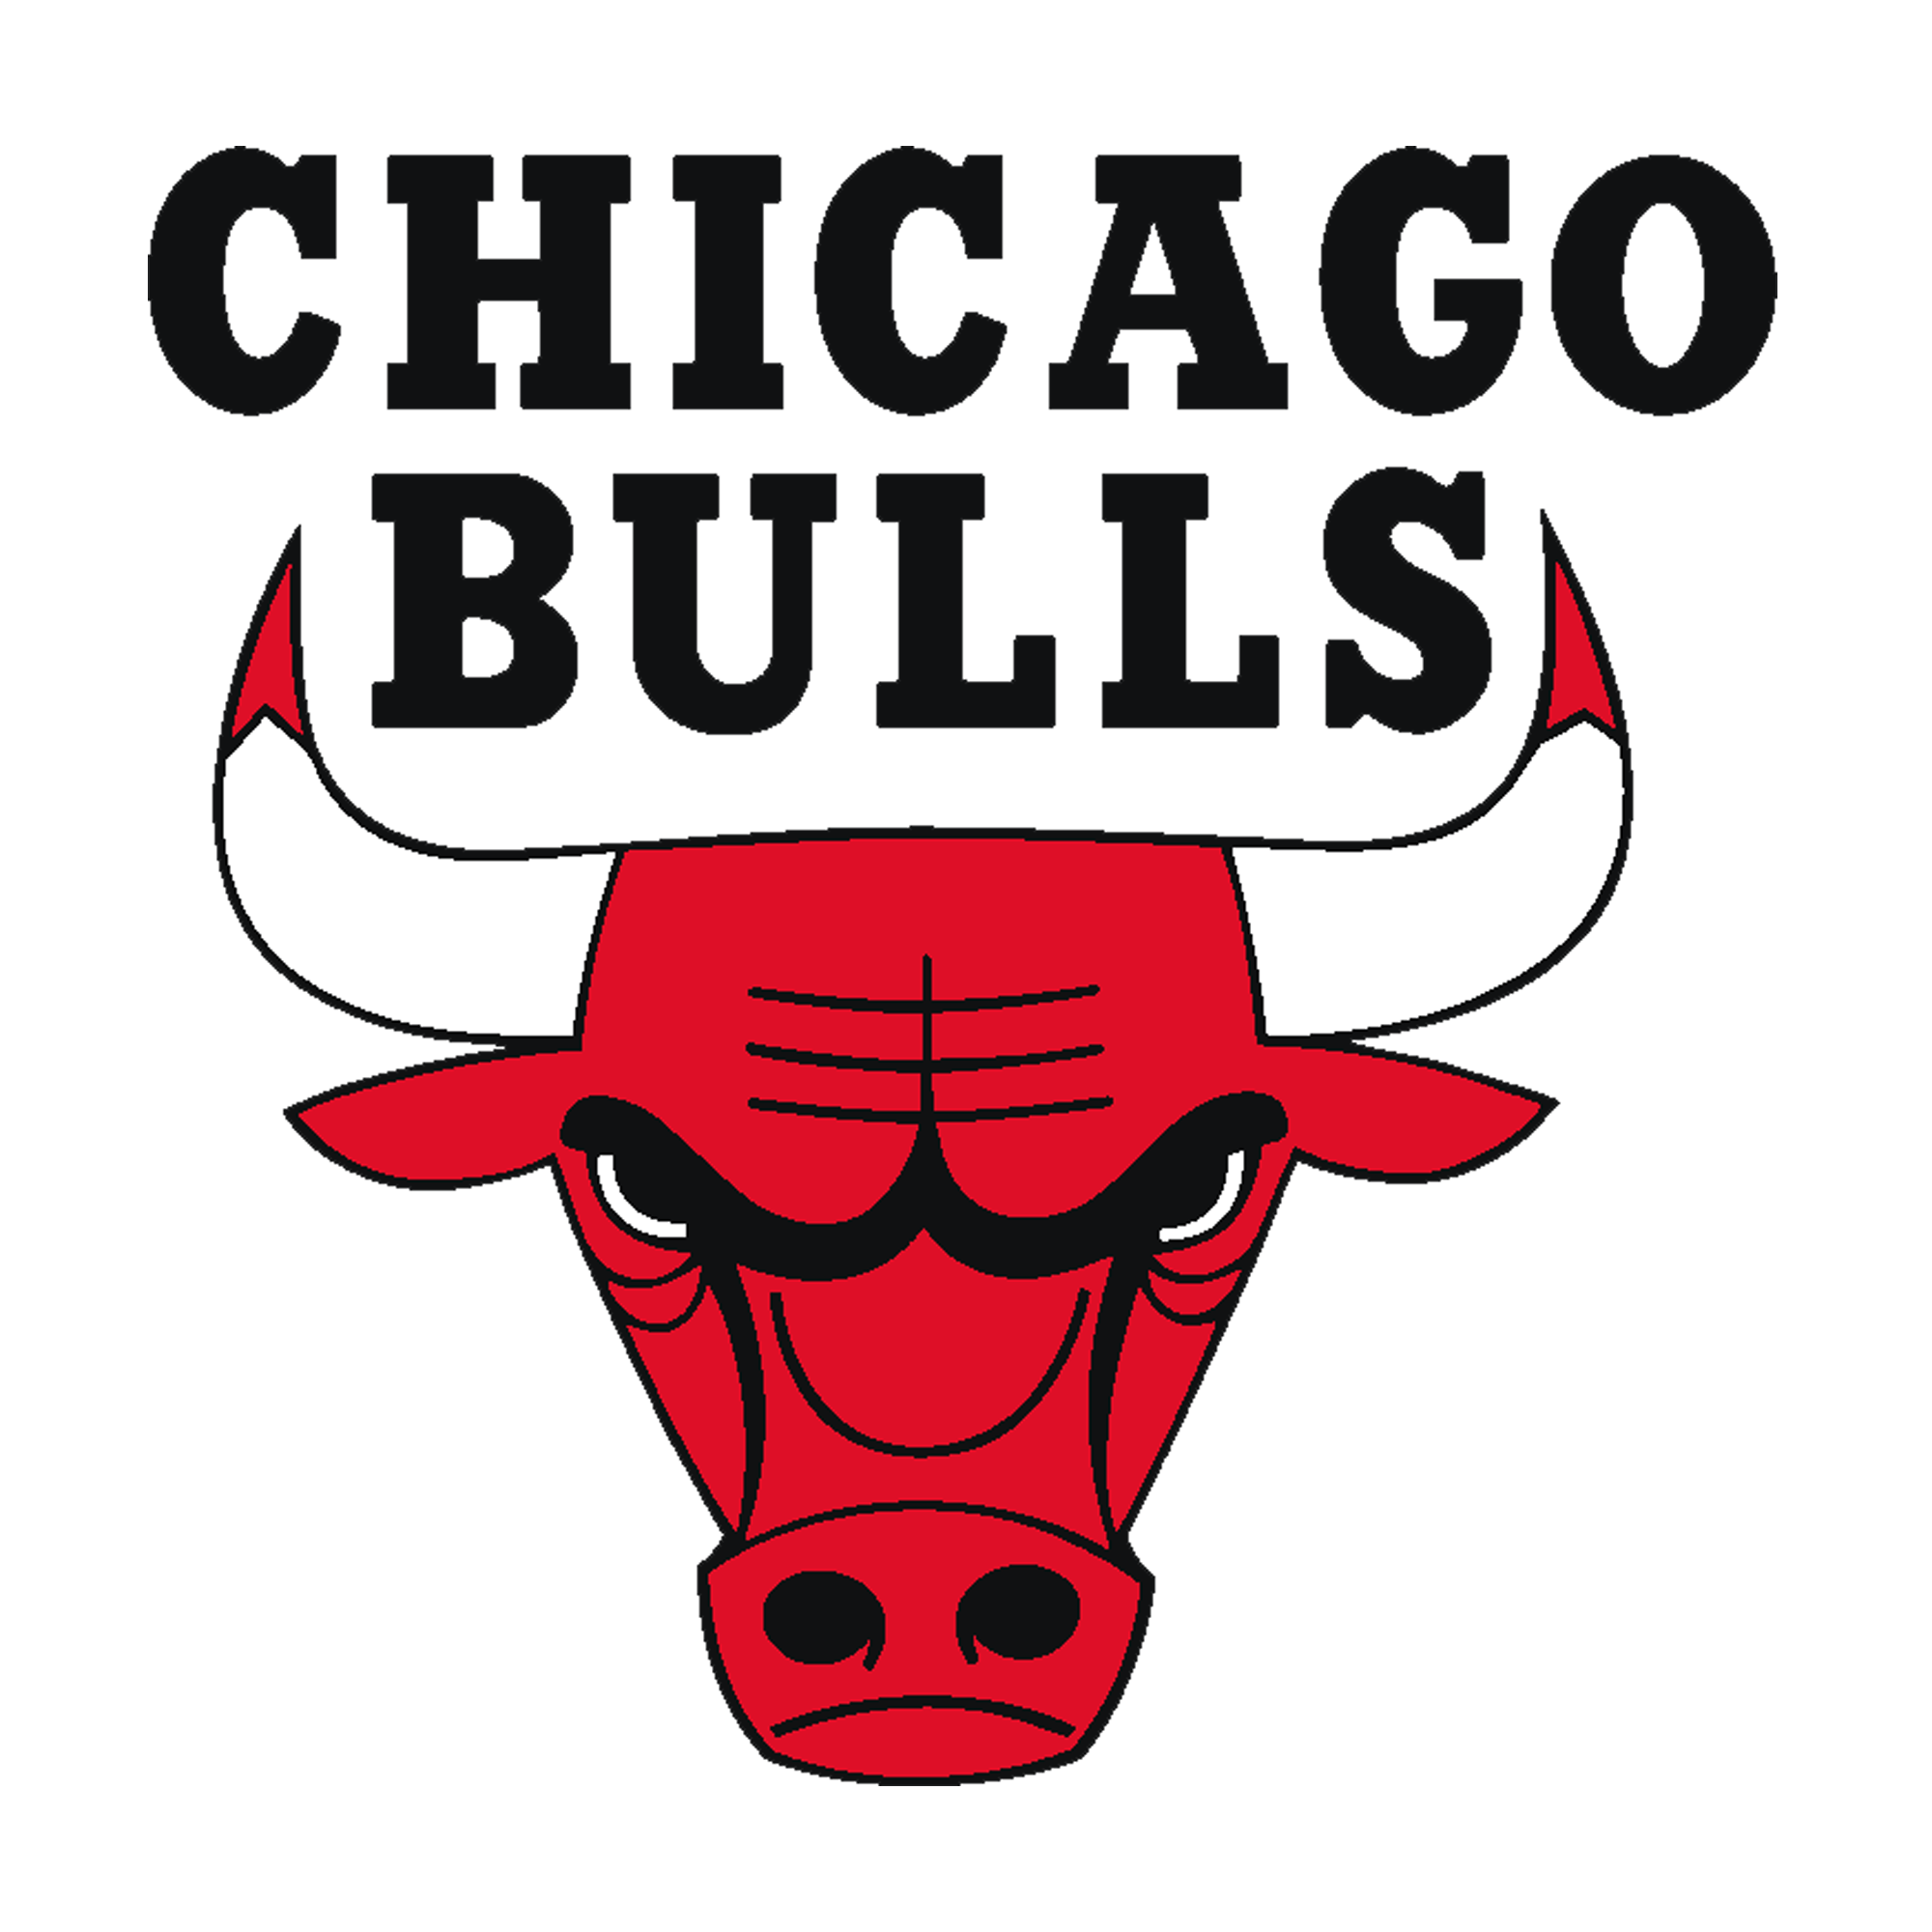 Chicago Bulls Logo Gets Redesigned With Modern Bull